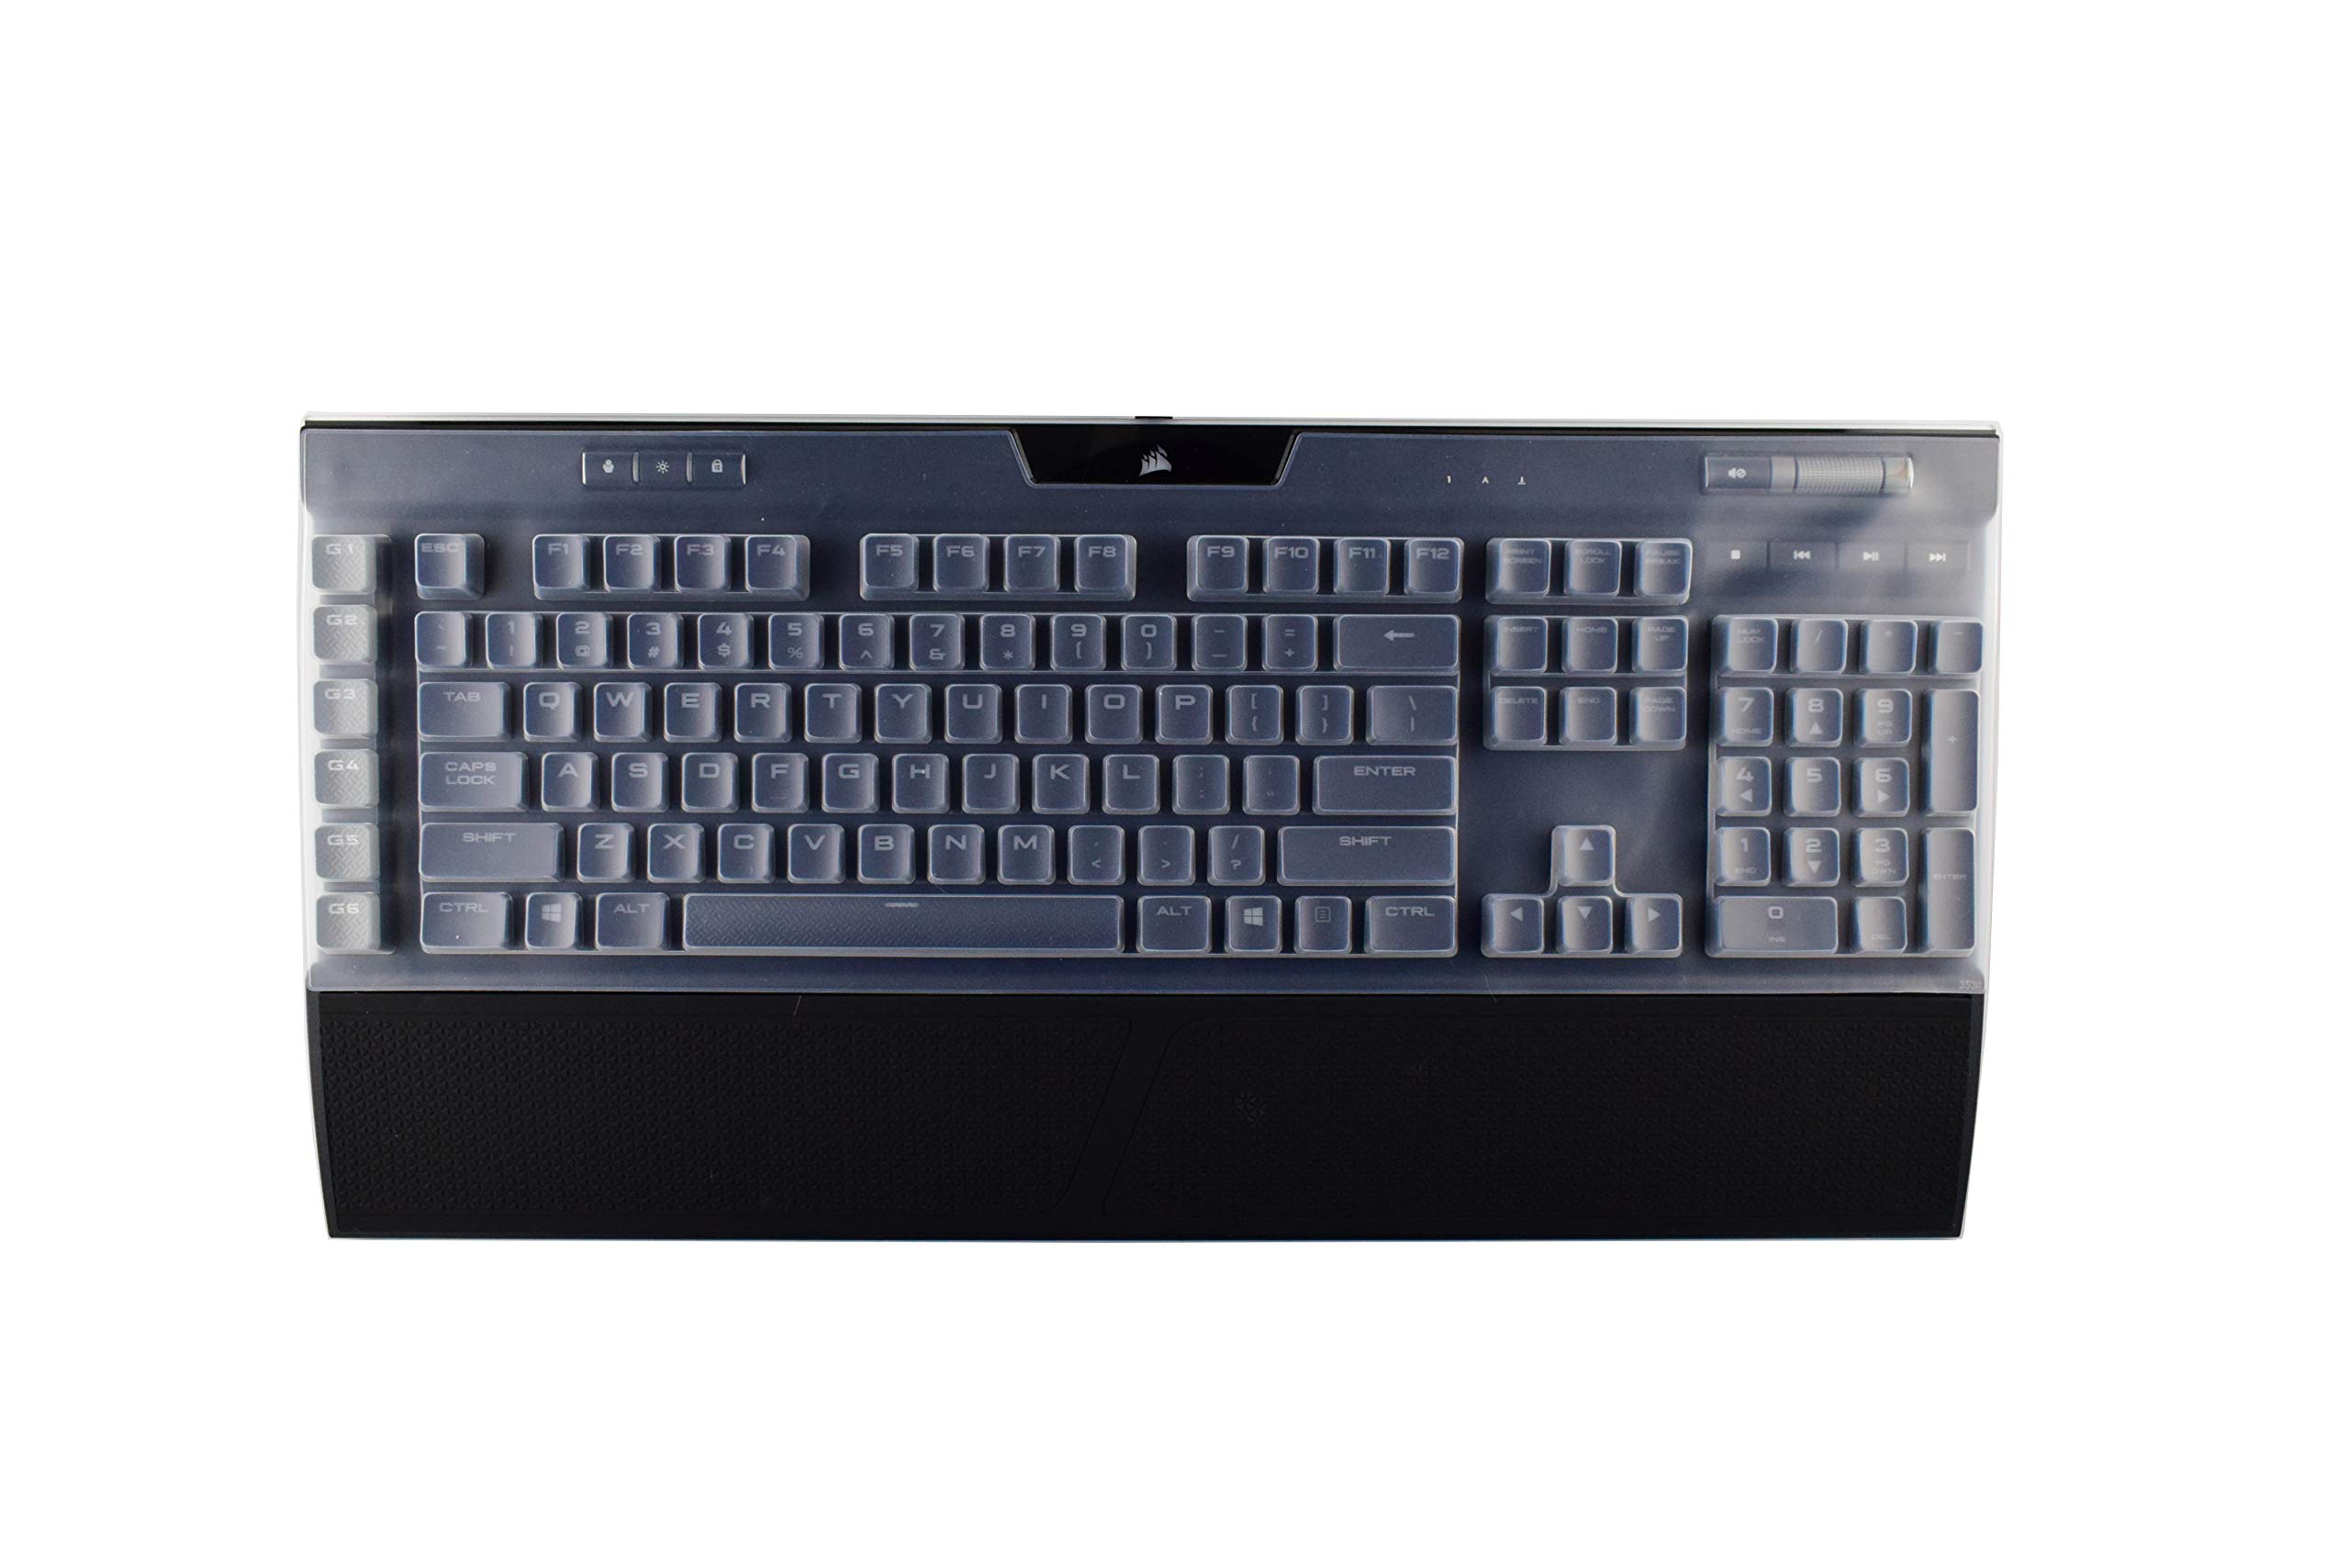 Keyboard Cover for Corsair K95 RGB, Corsair K95 RGB Platinum/Platinum XT Gaming Keyboard, Corsair K95 RGB Keyboard Cover Protector - Clear